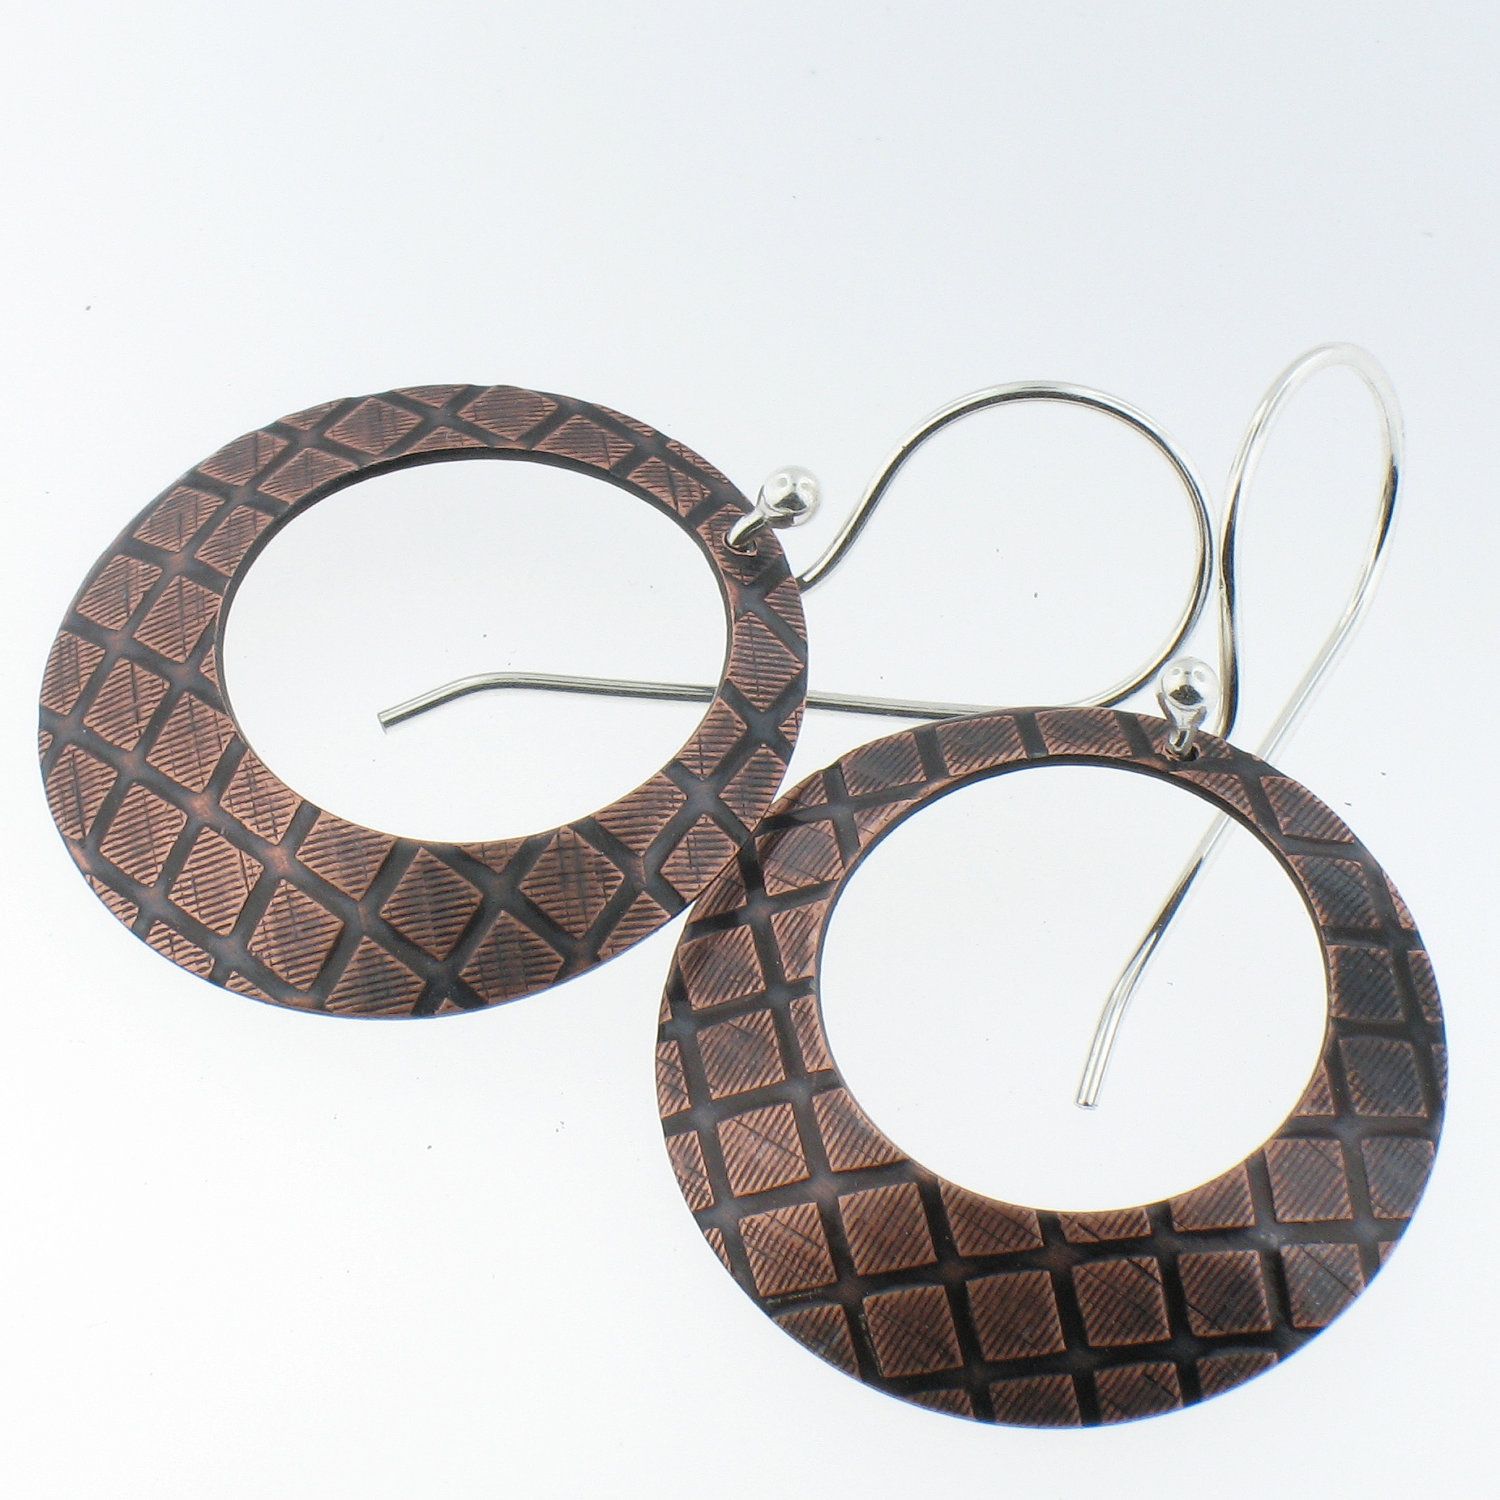 Handmade Copper Hoop Earrings with Sterling Sliver Ear Wires. $35.00, via Etsy.